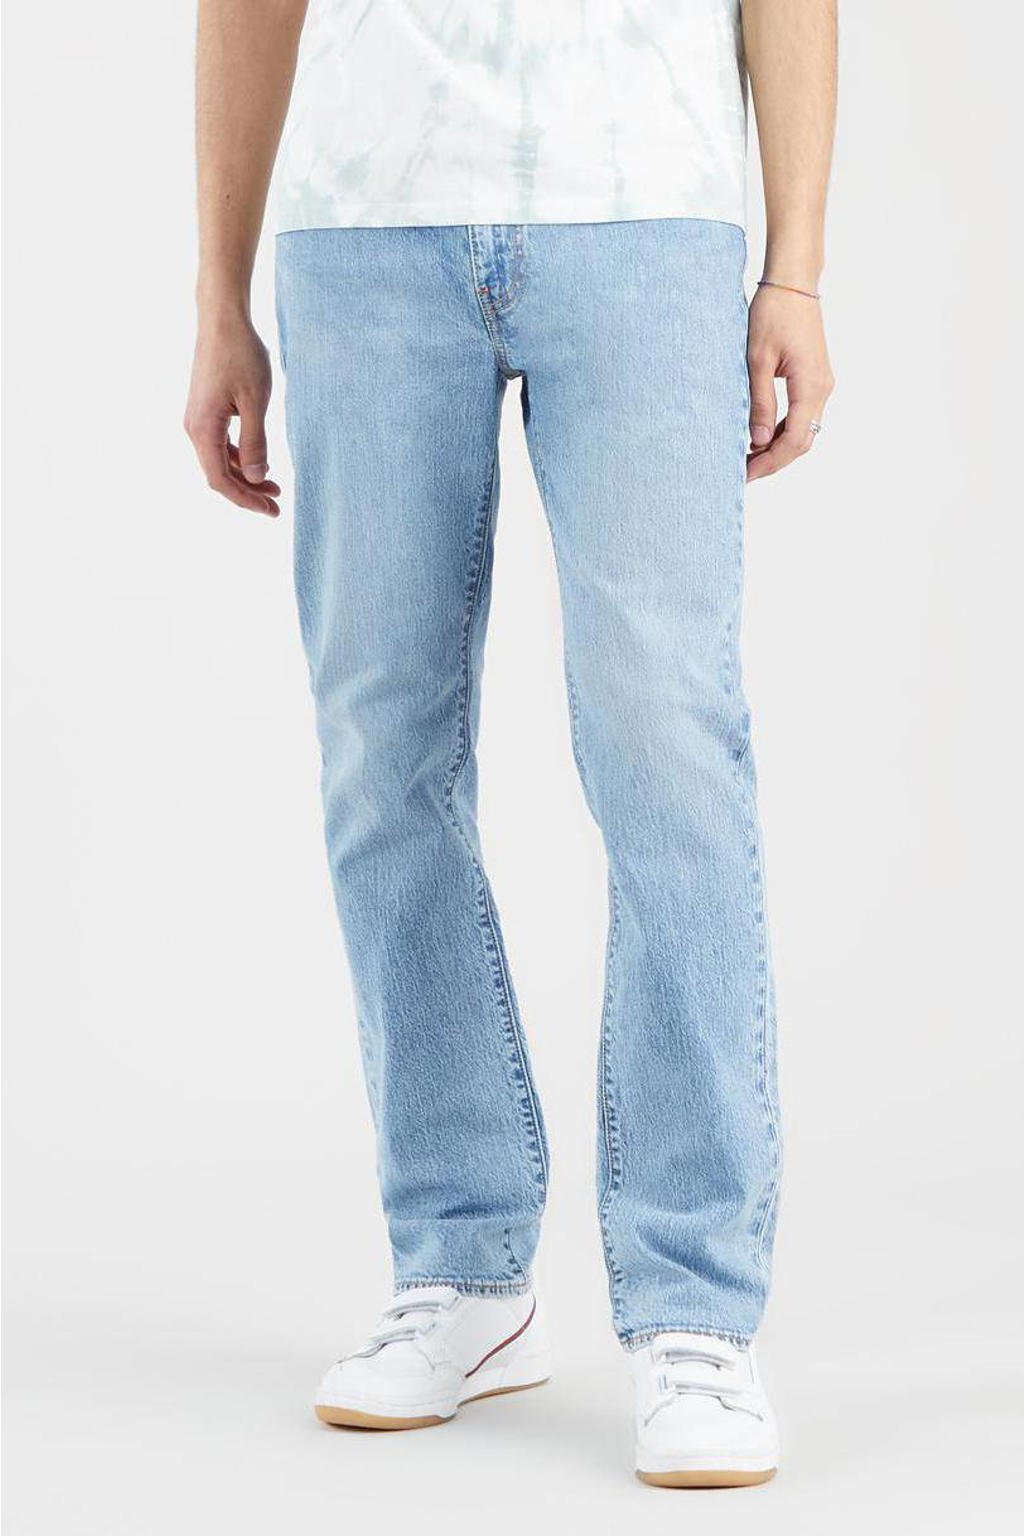 Levi's 511 slim fit jeans everett twilight tone